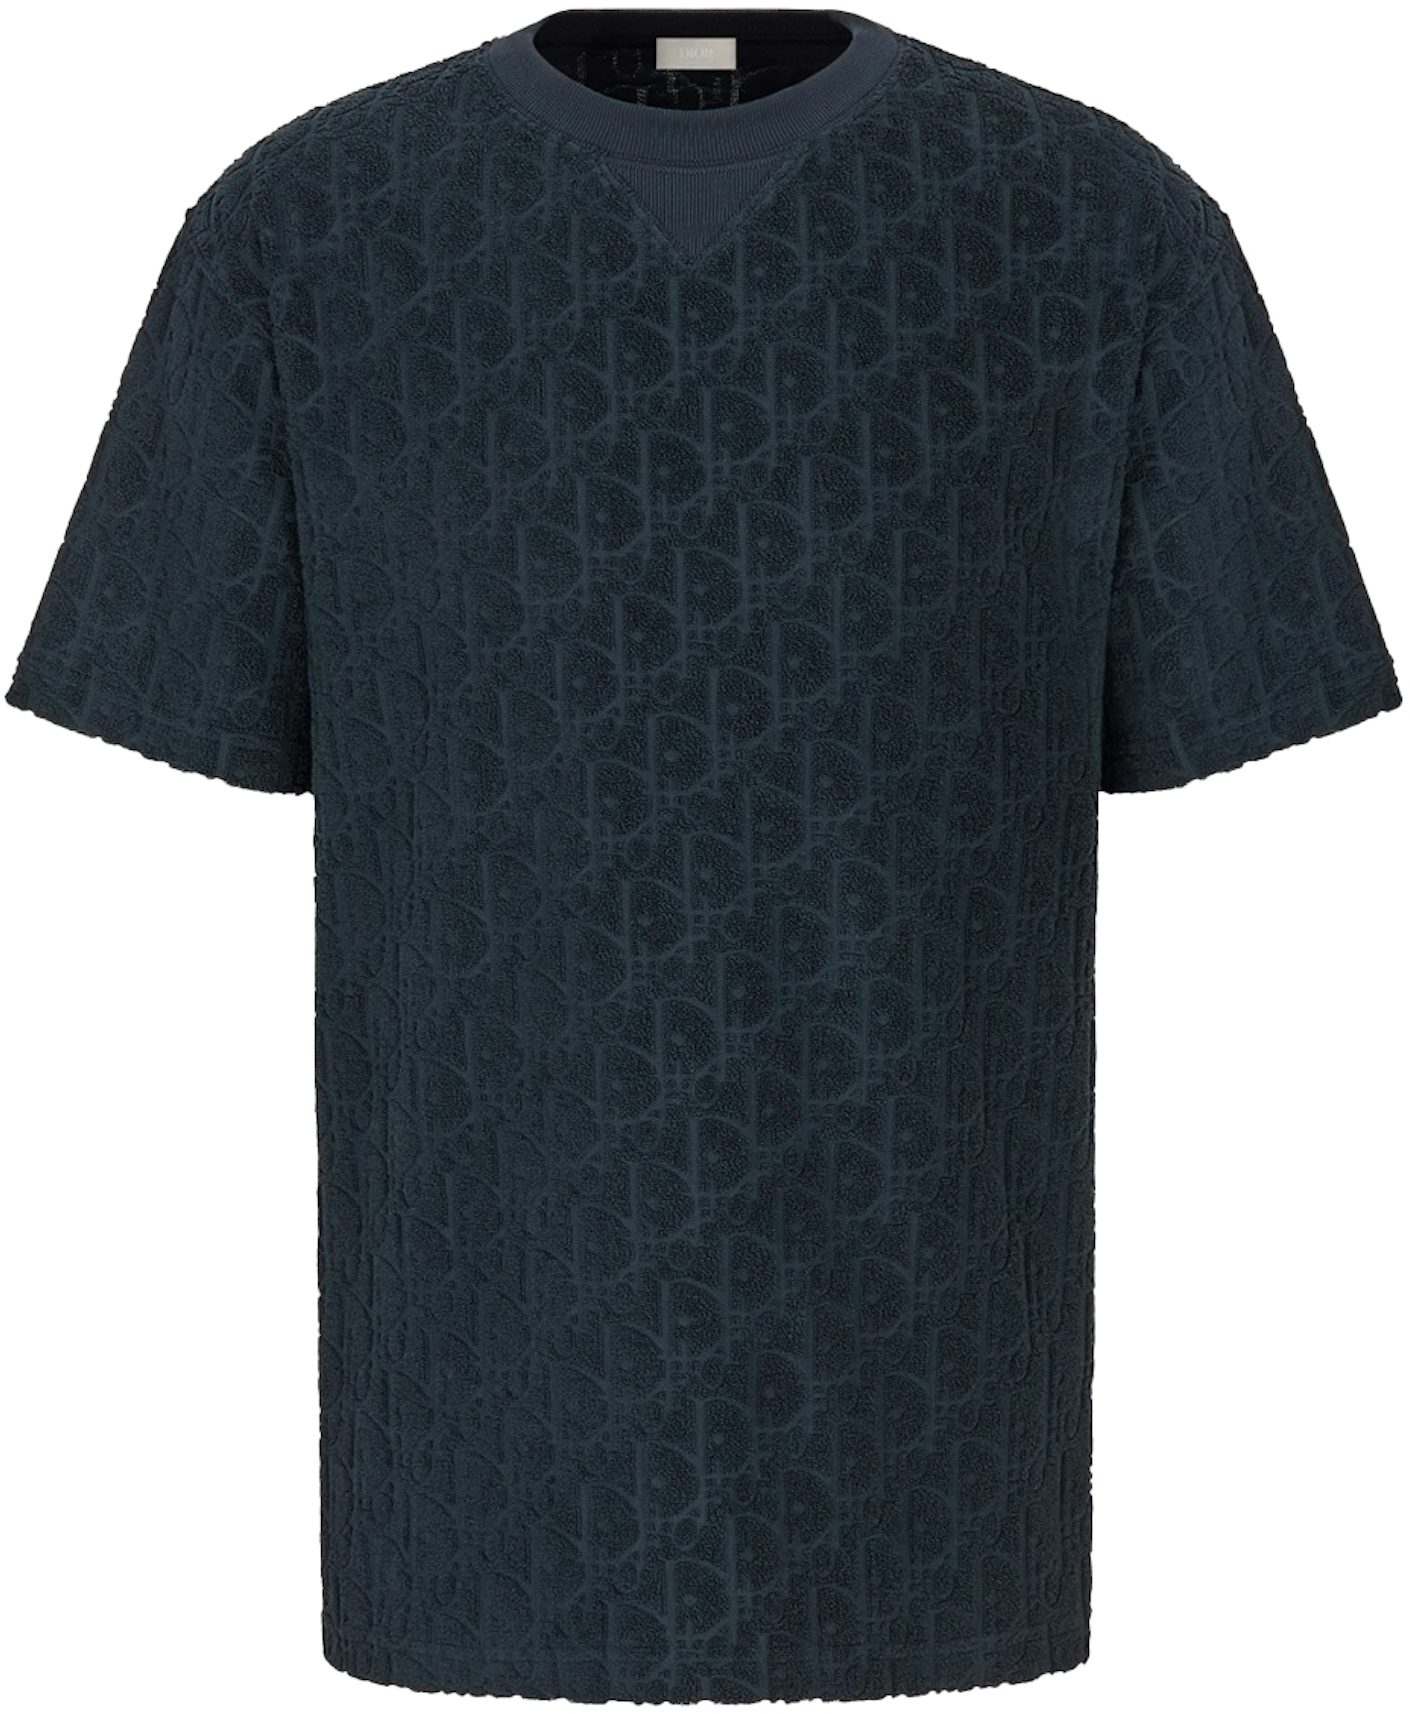 Dior - Dior Oblique Polo Shirt Khaki Cotton Jacquard - Size M - Men